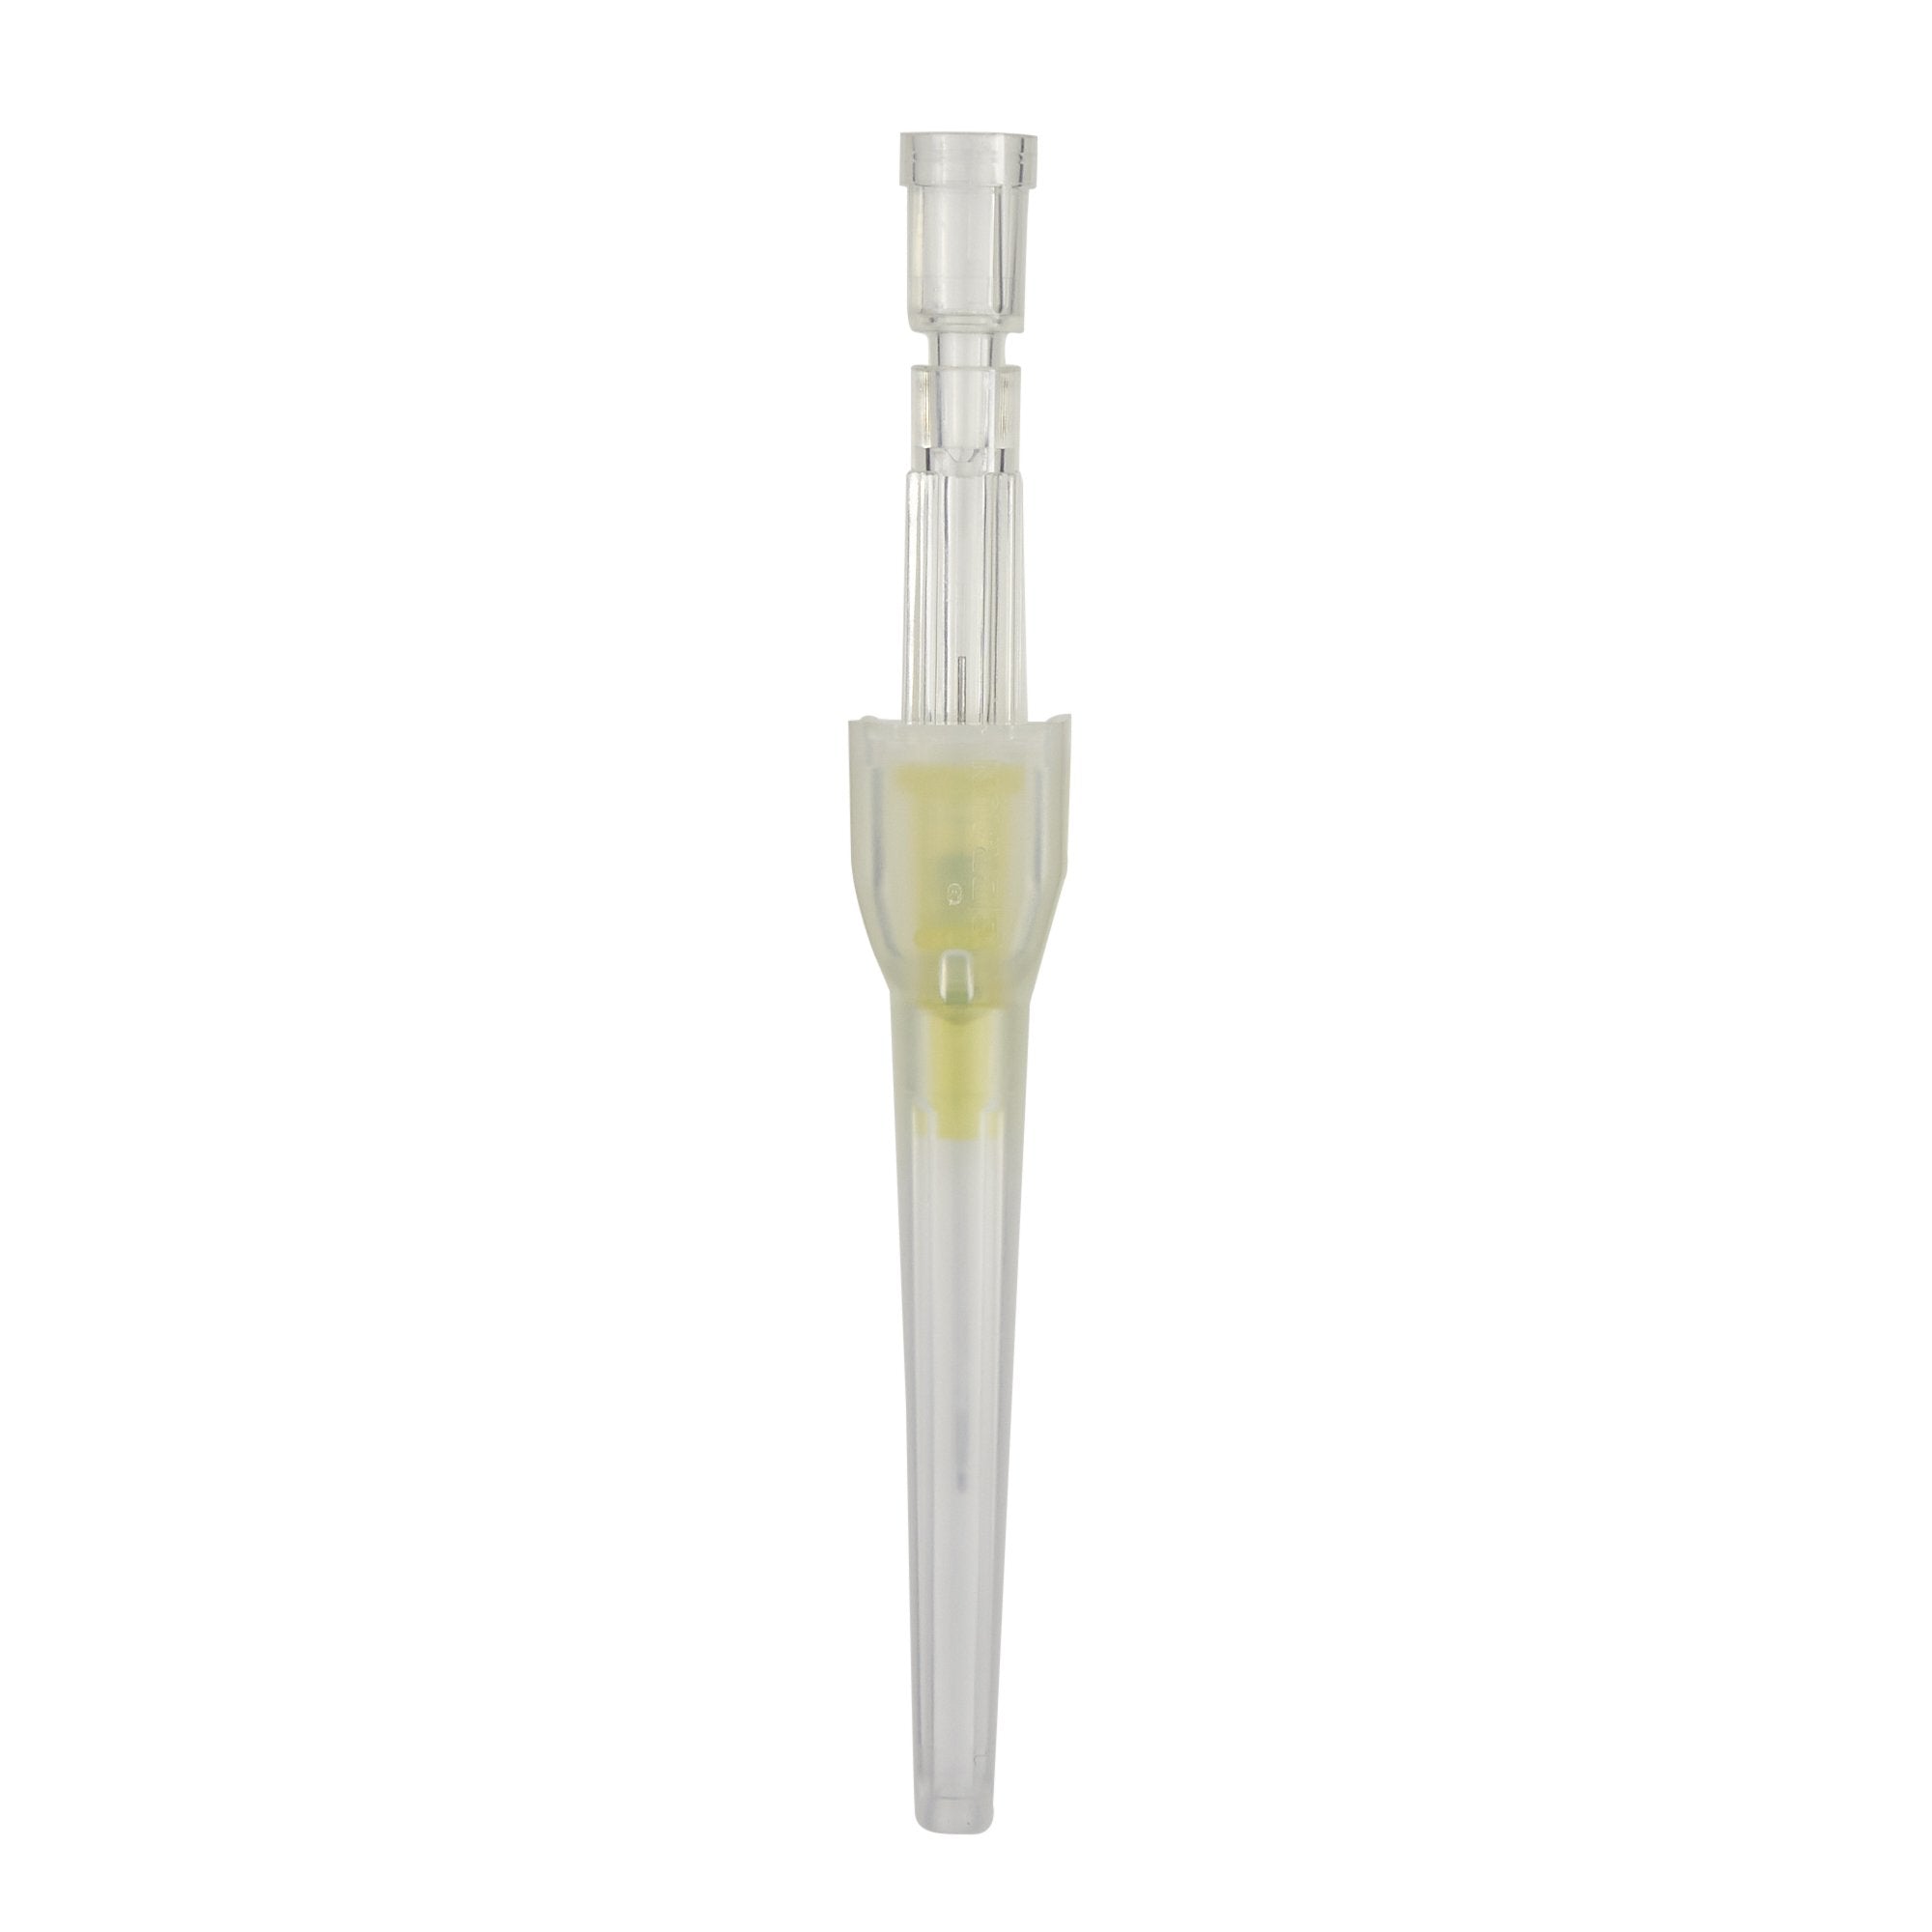 Peripheral IV Catheter Introcan Safety 24 Gauge 0.75 Inch Sliding Safety Needle